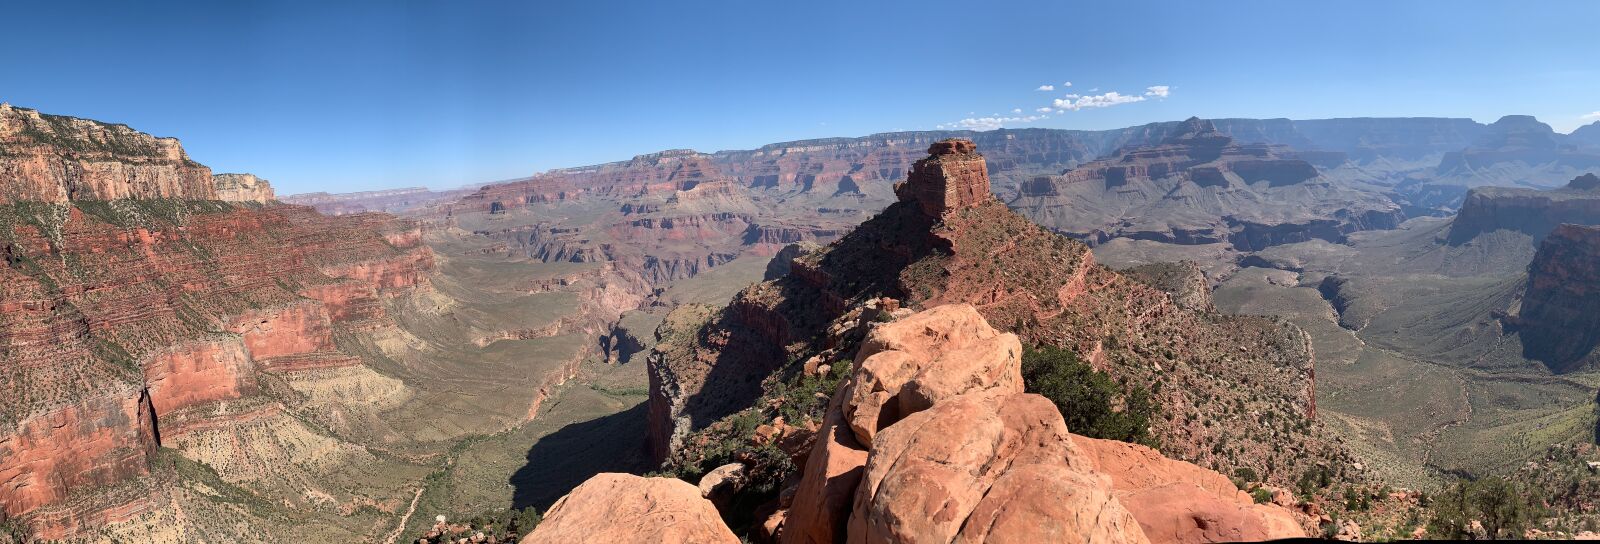 iPhone XS Max back camera 4.25mm f/1.8 sample photo. Grand canyon, panorama, landscape photography